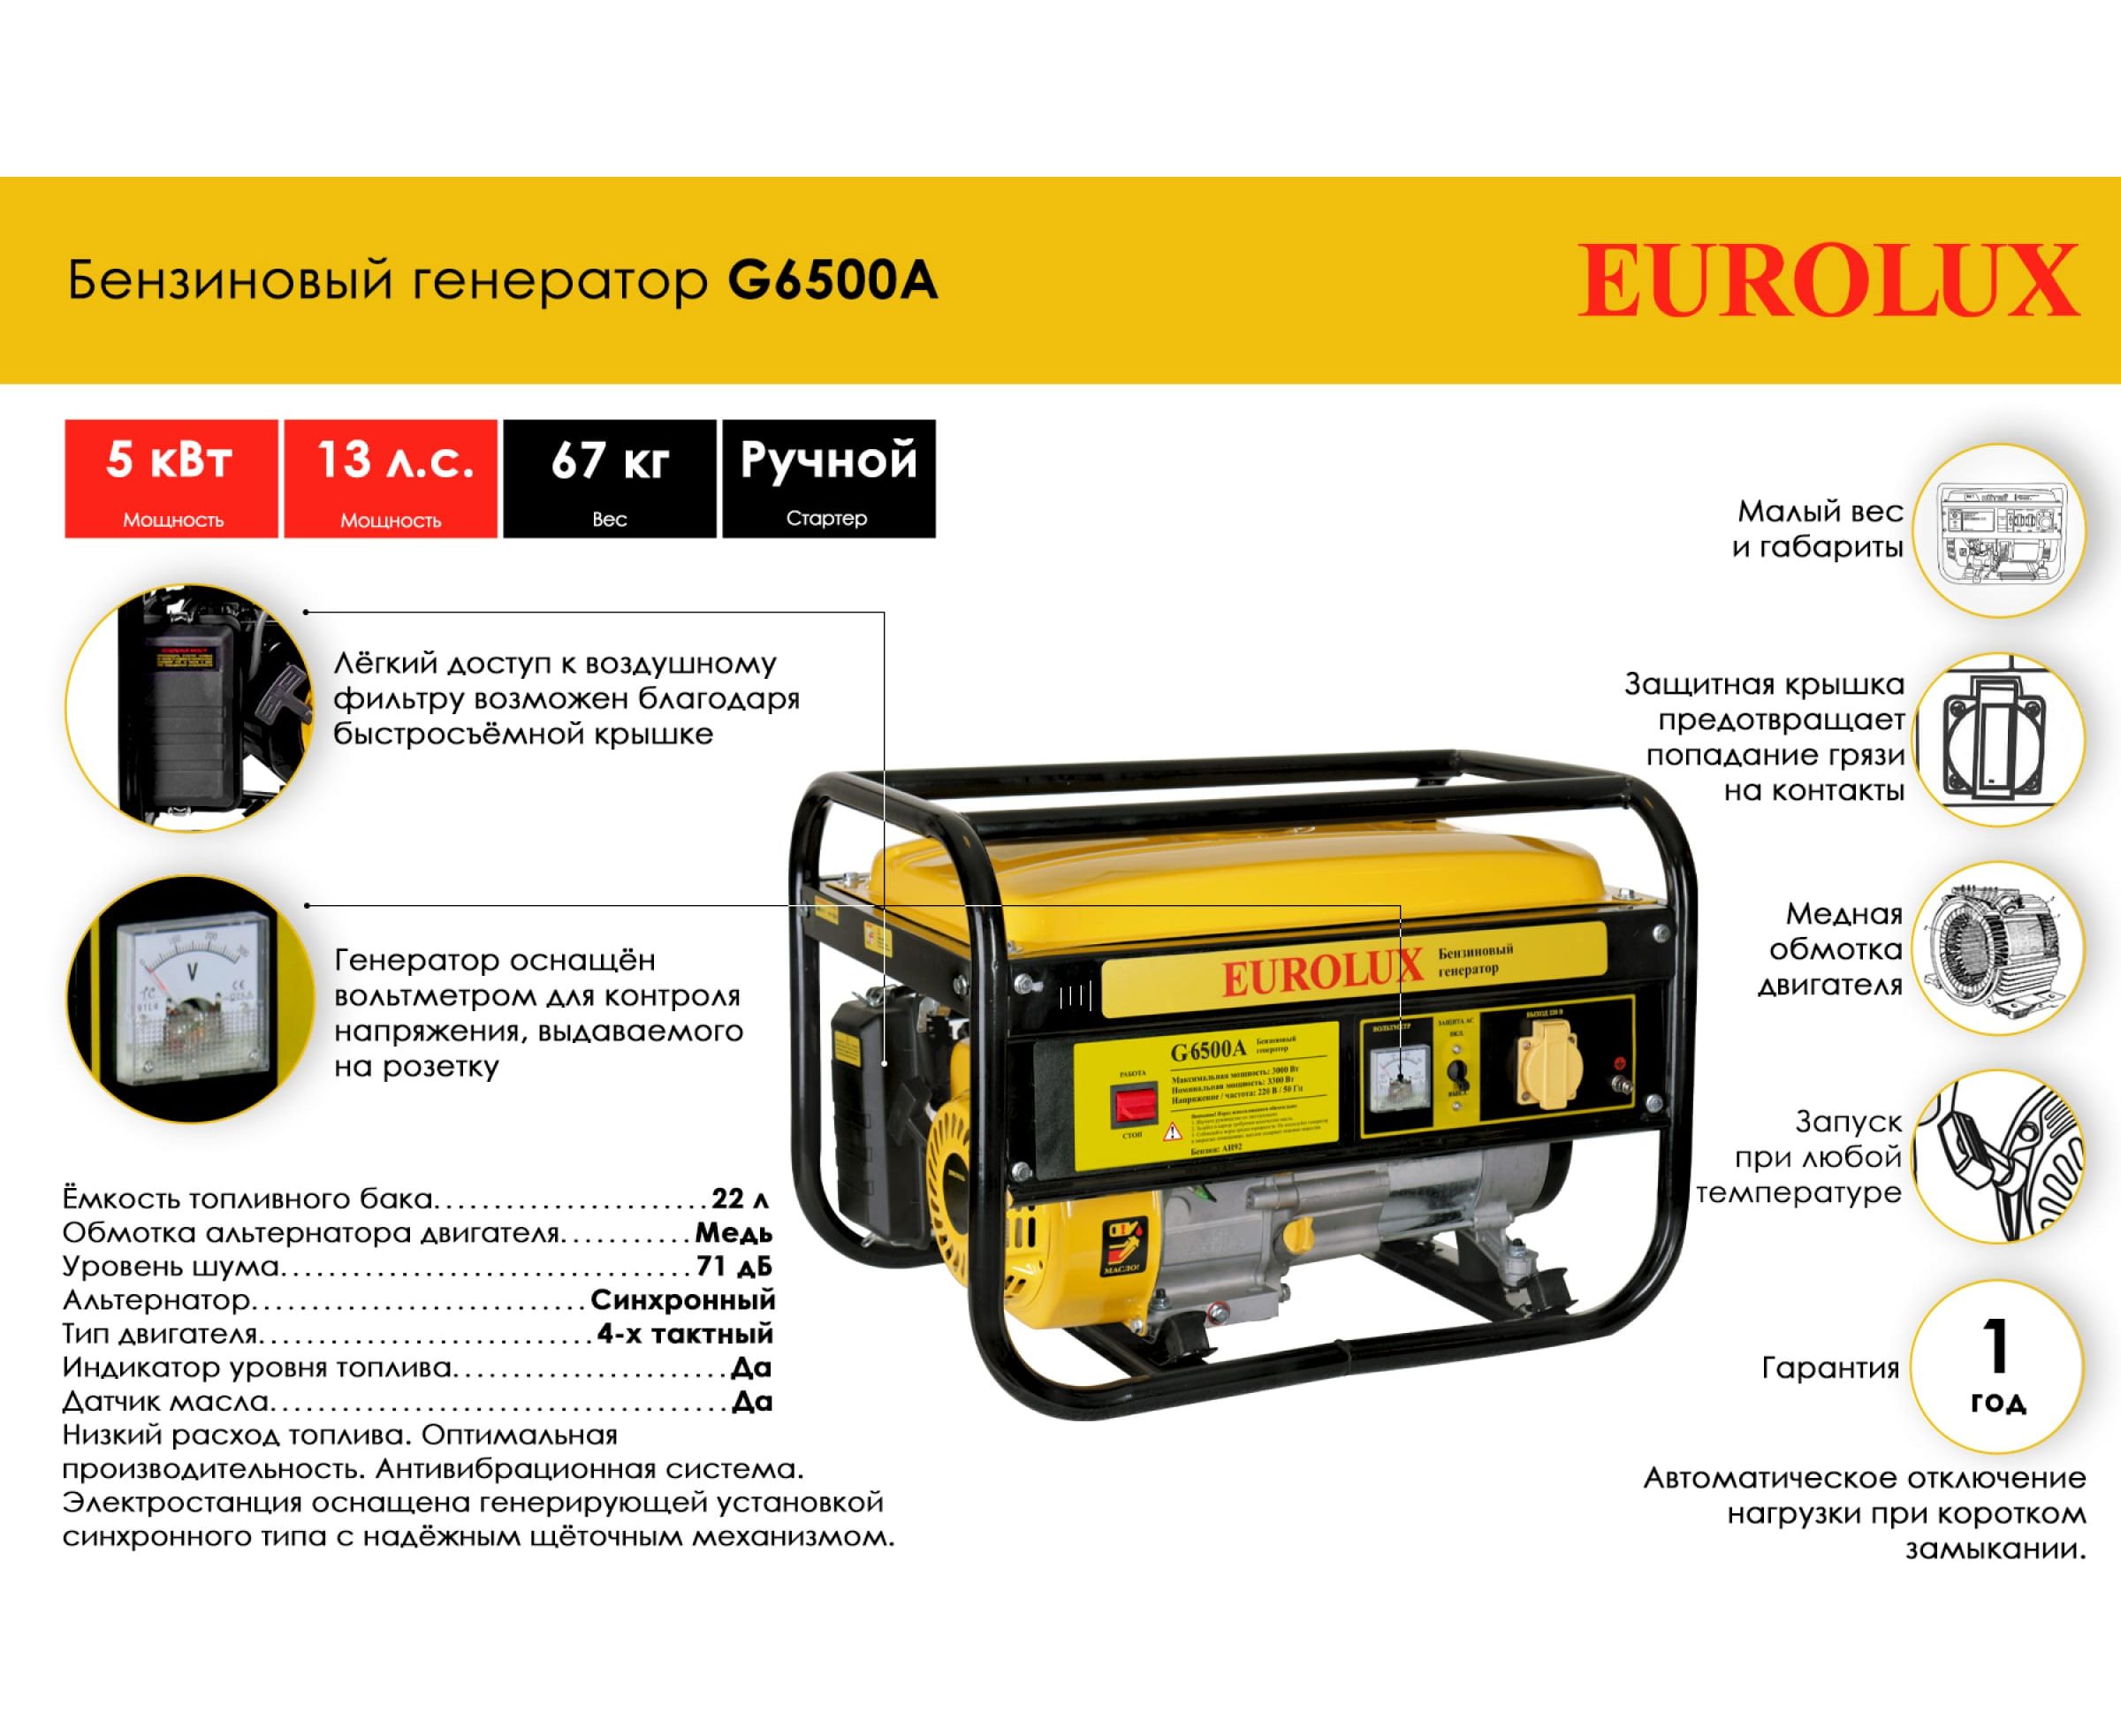 Eurolux g6500a. Электрогенератор g6500a Eurolux. Электрогенератор Eurolux g2700a. Электрогенератор Eurolux g6500a 64/1/42. Бензиновый Генератор Eurolux g2700a.